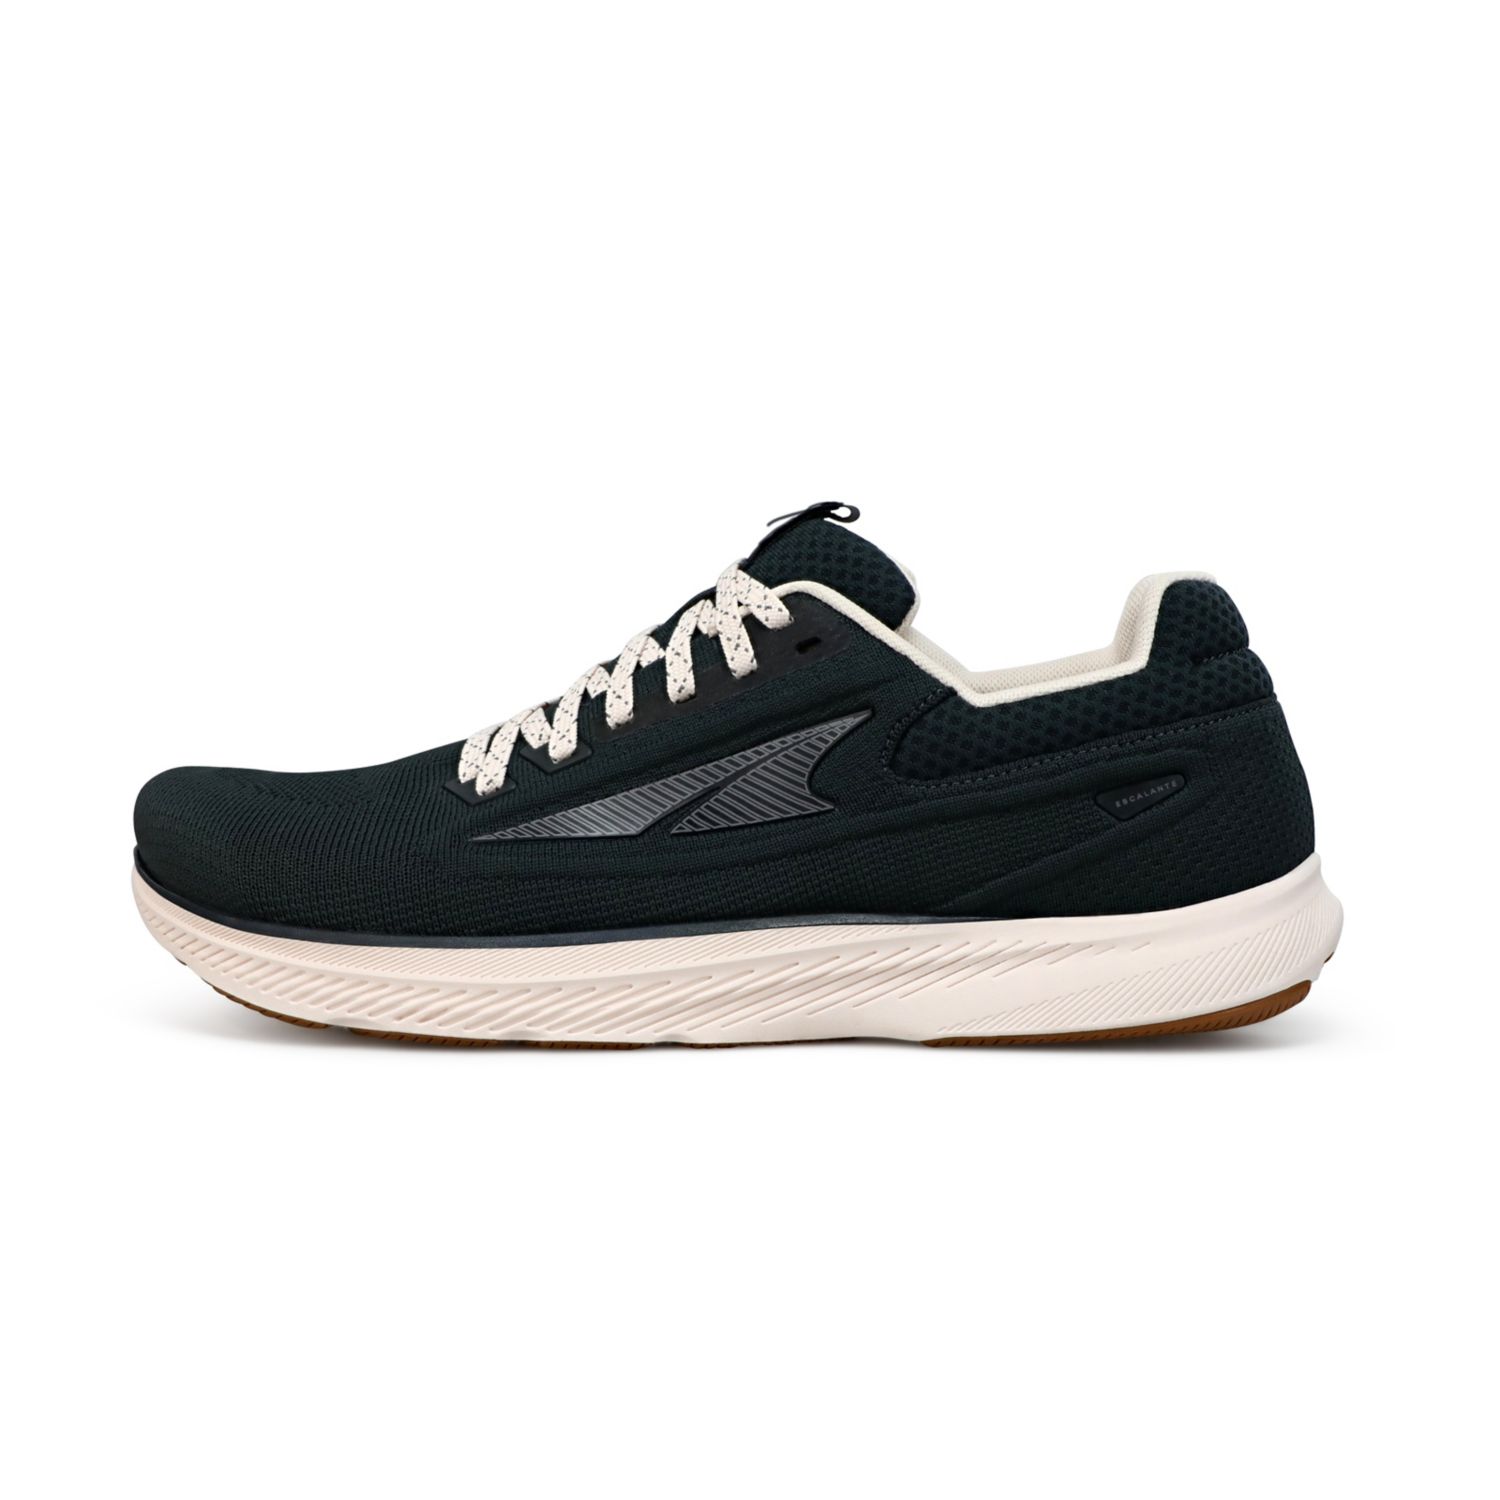 Black / Grey Altra Escalante 3 Women's Walking Shoes | Ireland-74065319